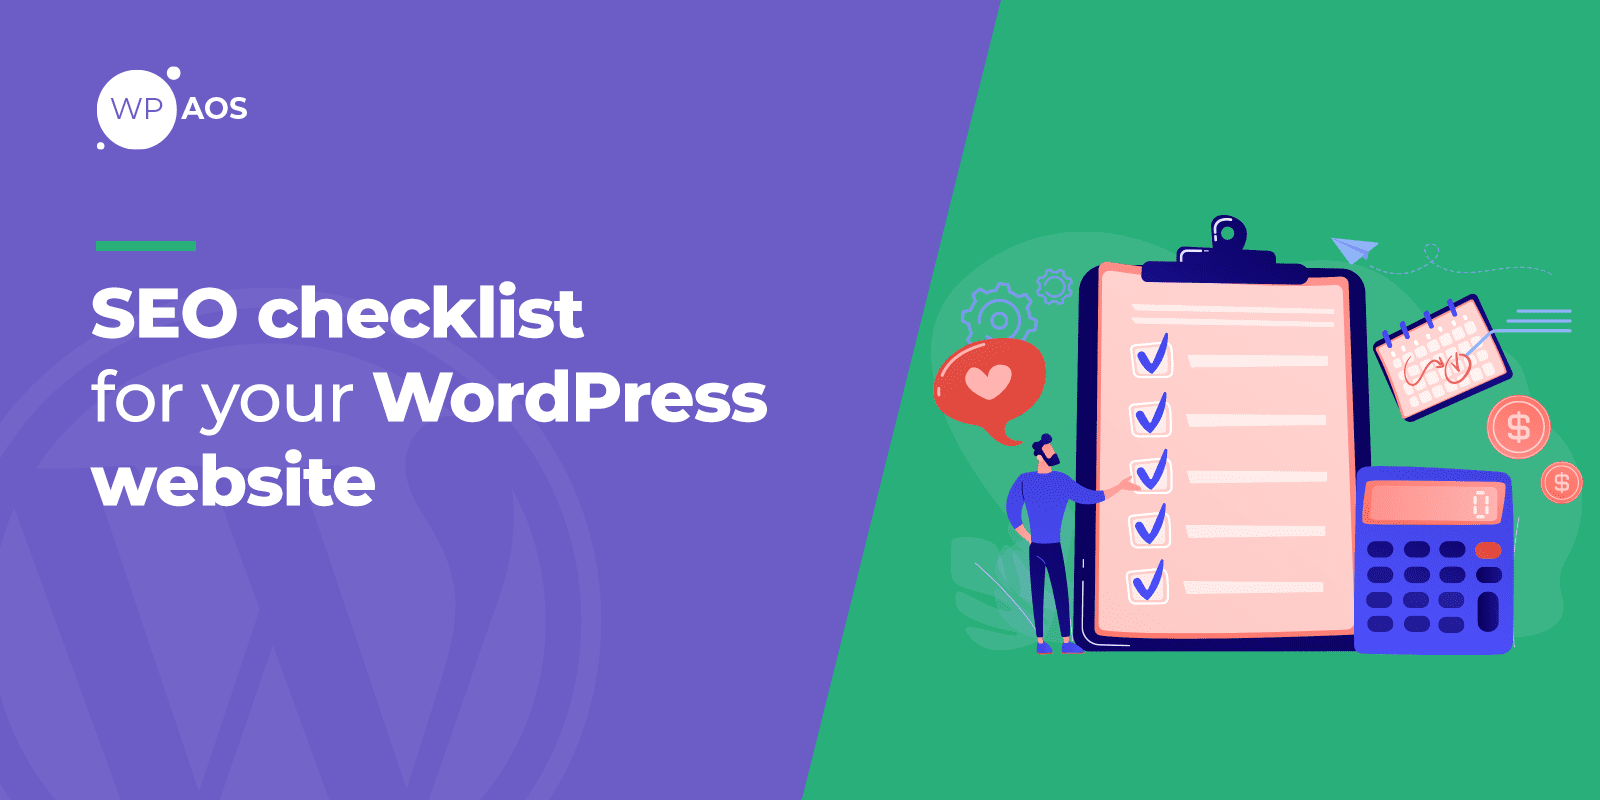 WordPress SEO checklist, website search engine optimization, wpaos